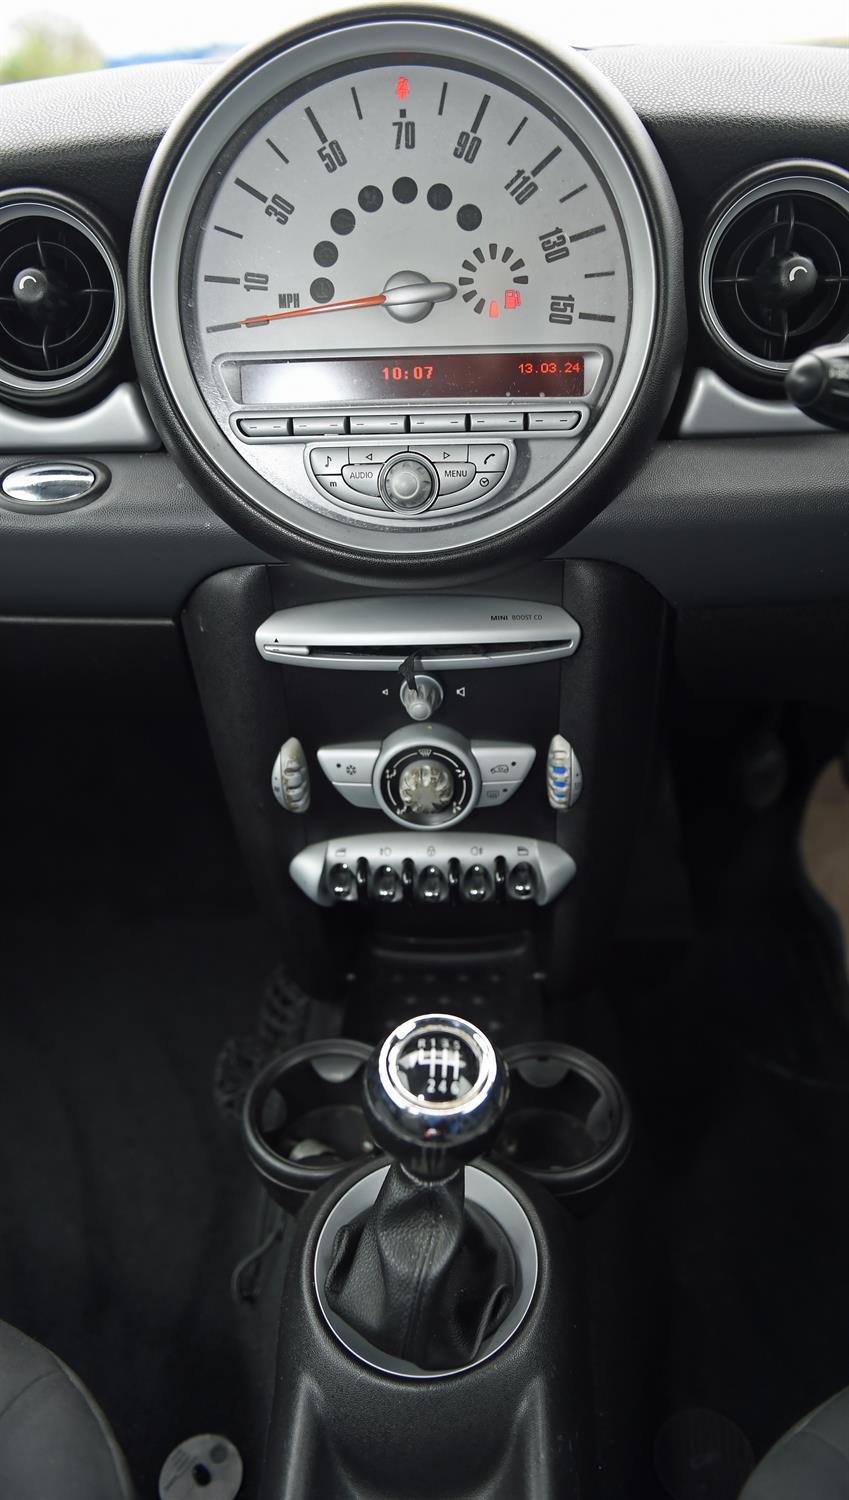 2007 Mini Cooper 1.6 petrol 6 speed manual. Registration number: OW07 CVV. Mileage: 112,422. - Image 7 of 14